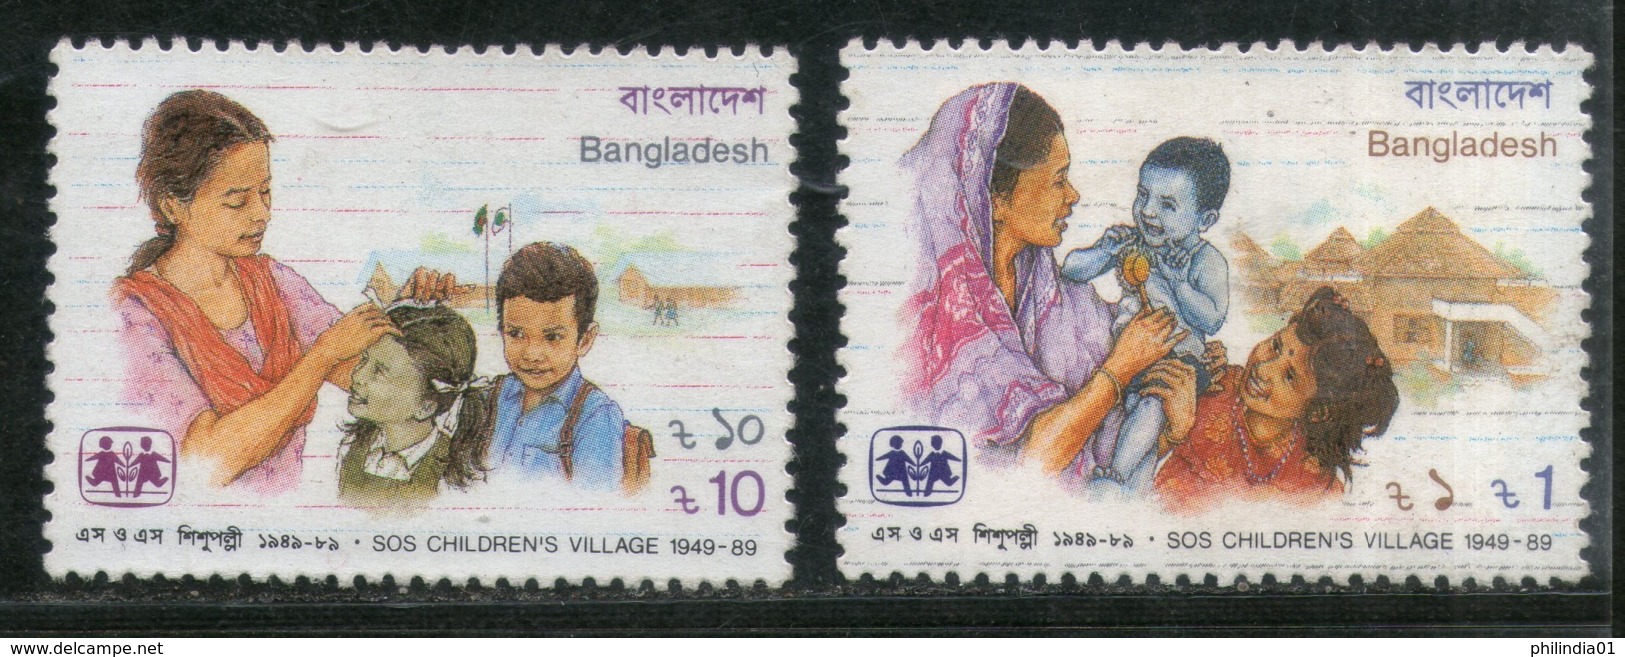 Bangladesh 1989 SOS Children’s Village Child Survival Health Sc 331-2 MNH # 2022 - Bangladesh